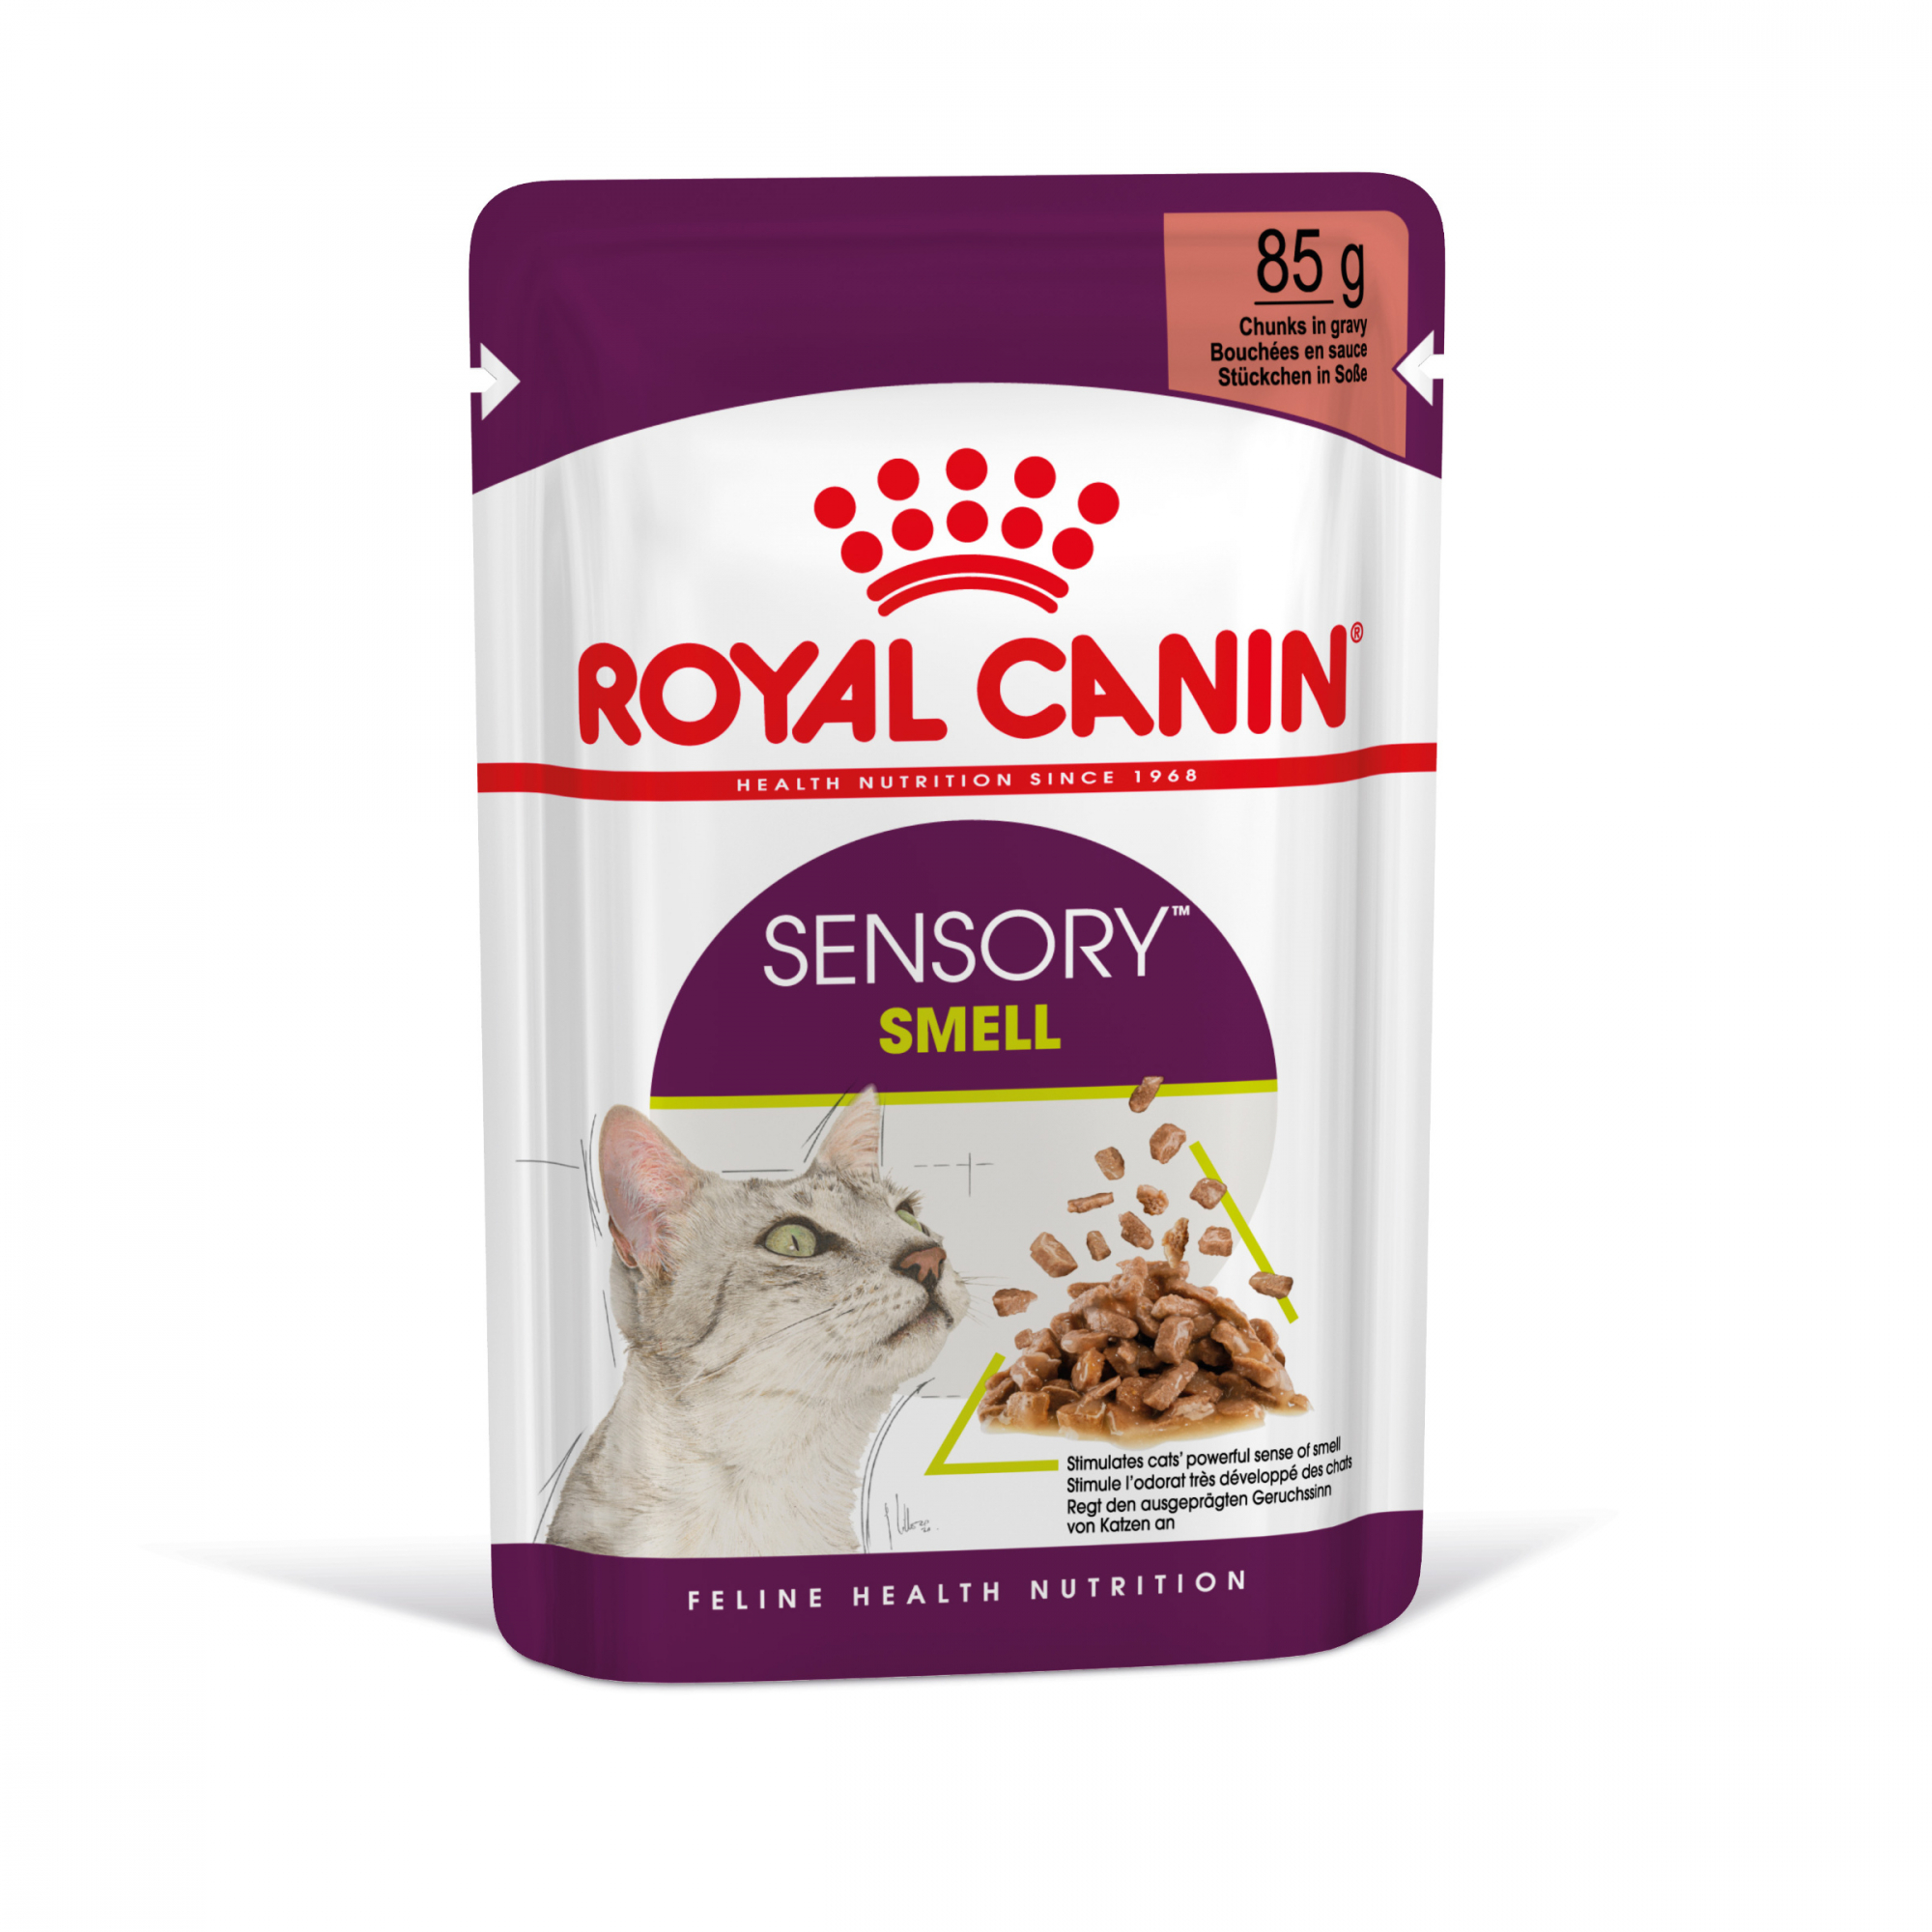 Royal Canin Sensory Smell pâtée en sauce pour chat